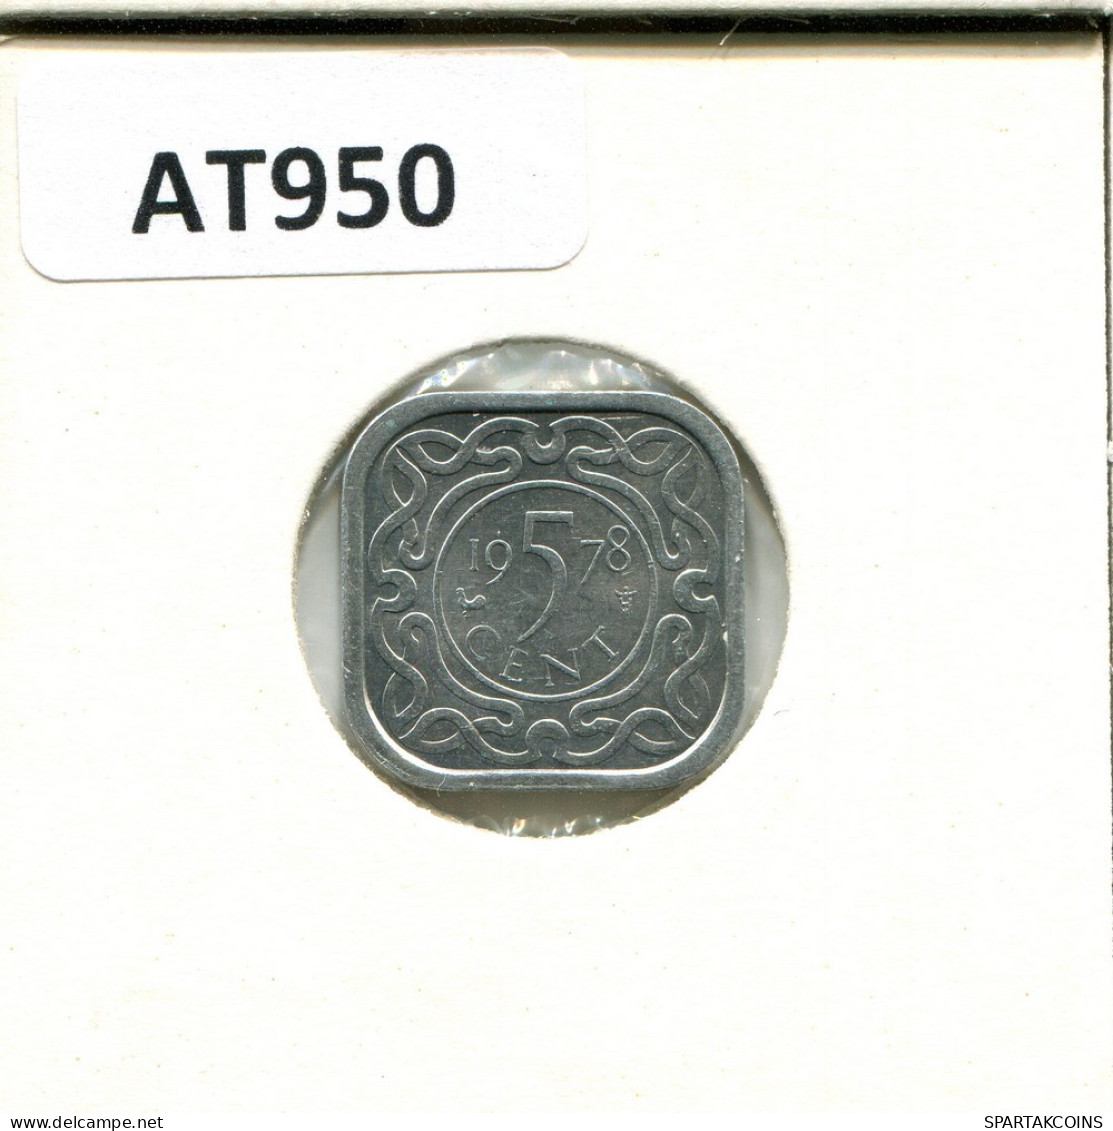 5 CENTS 1978 SURINAME Coin #AT950.U.A - Surinam 1975 - ...